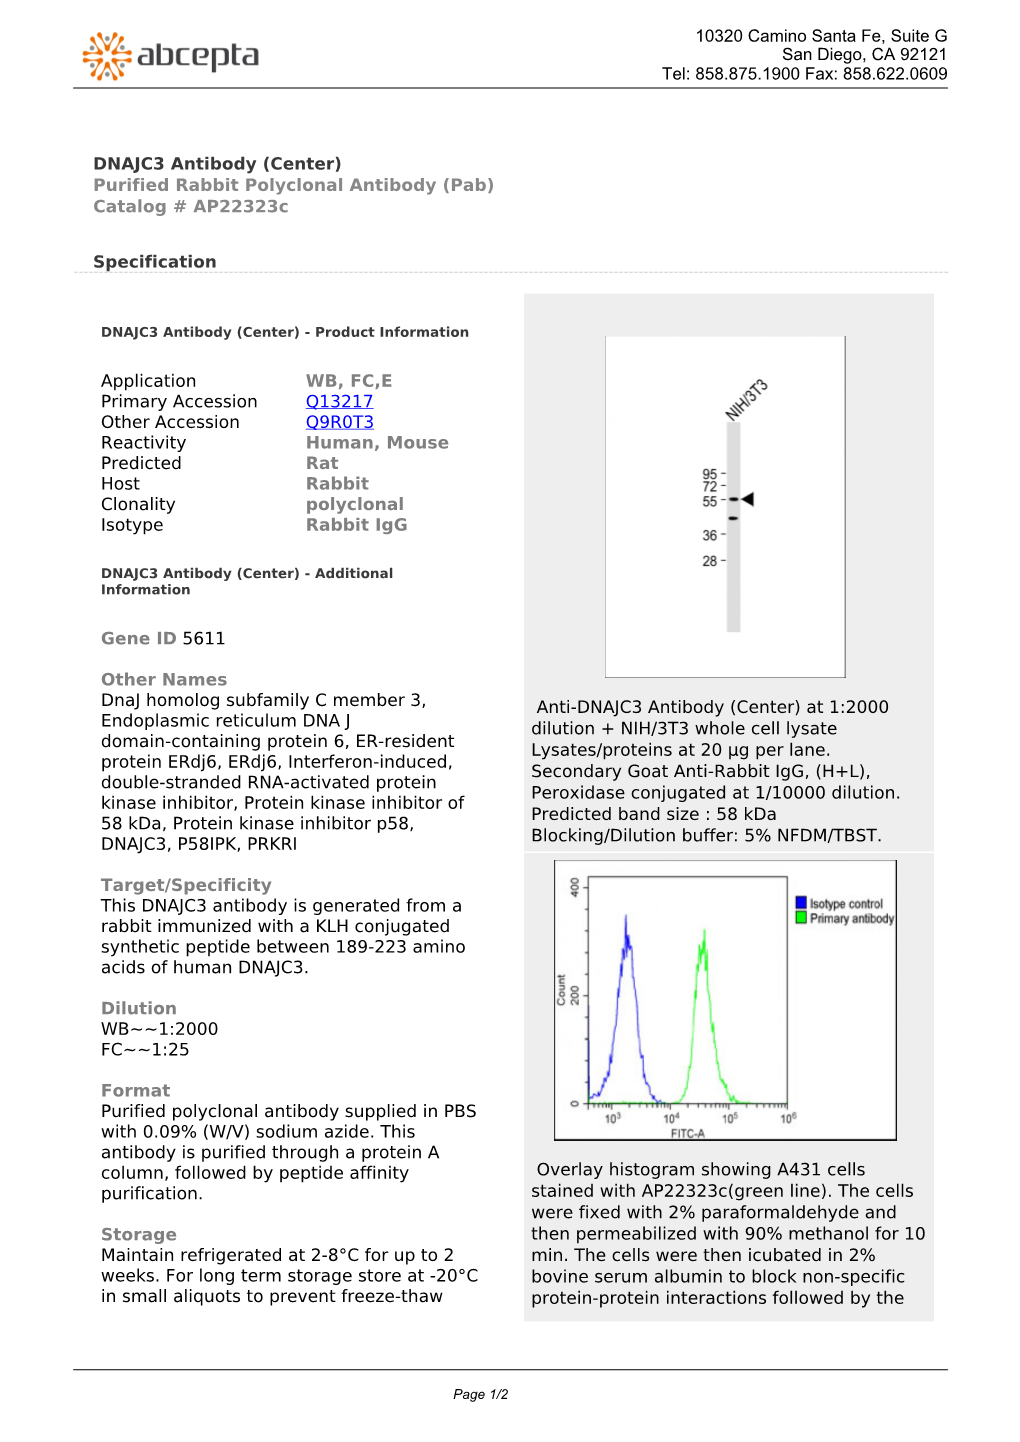 DNAJC3 Antibody (Center) Purified Rabbit Polyclonal Antibody (Pab) Catalog # Ap22323c